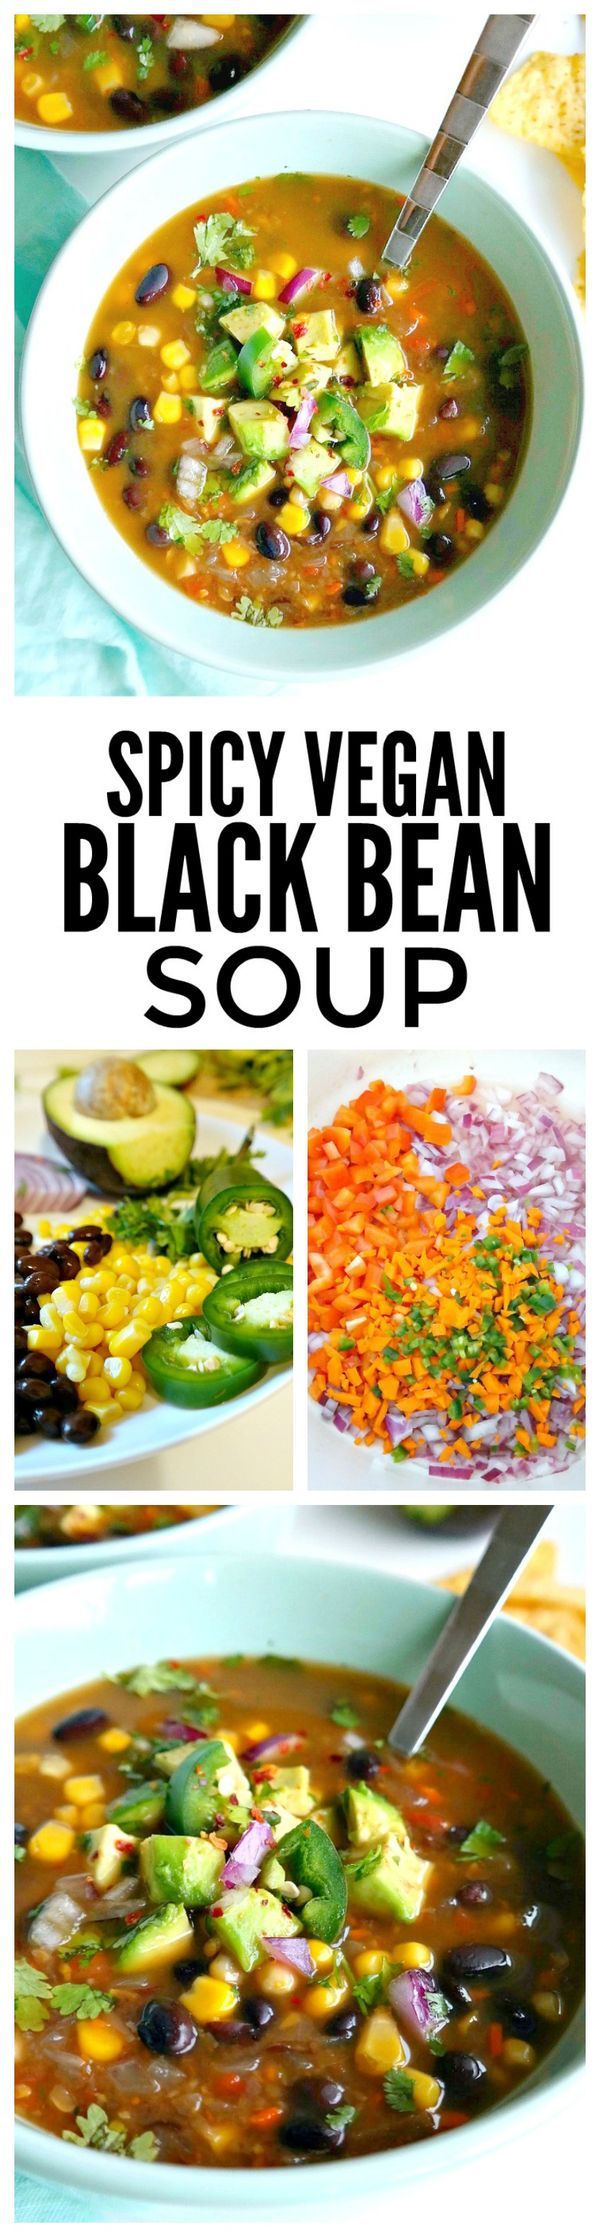 Spicy Vegan Black Bean Soup